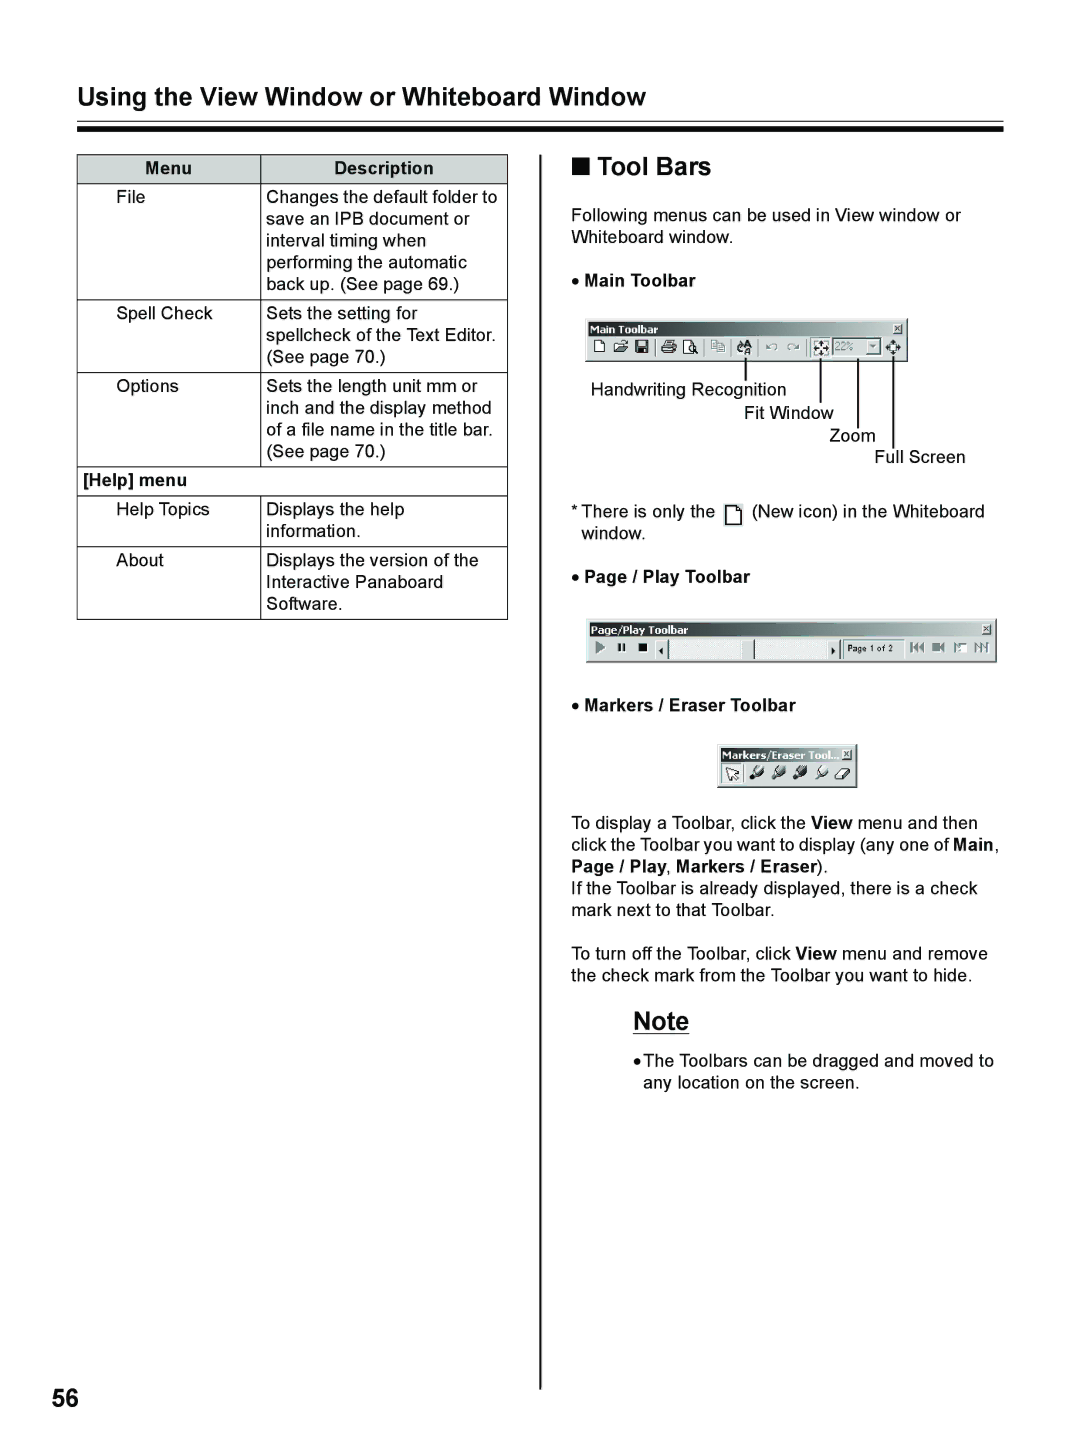 Panasonic UB-8325 operating instructions Tool Bars, Help menu, Main Toolbar, Play Toolbar Markers / Eraser Toolbar 